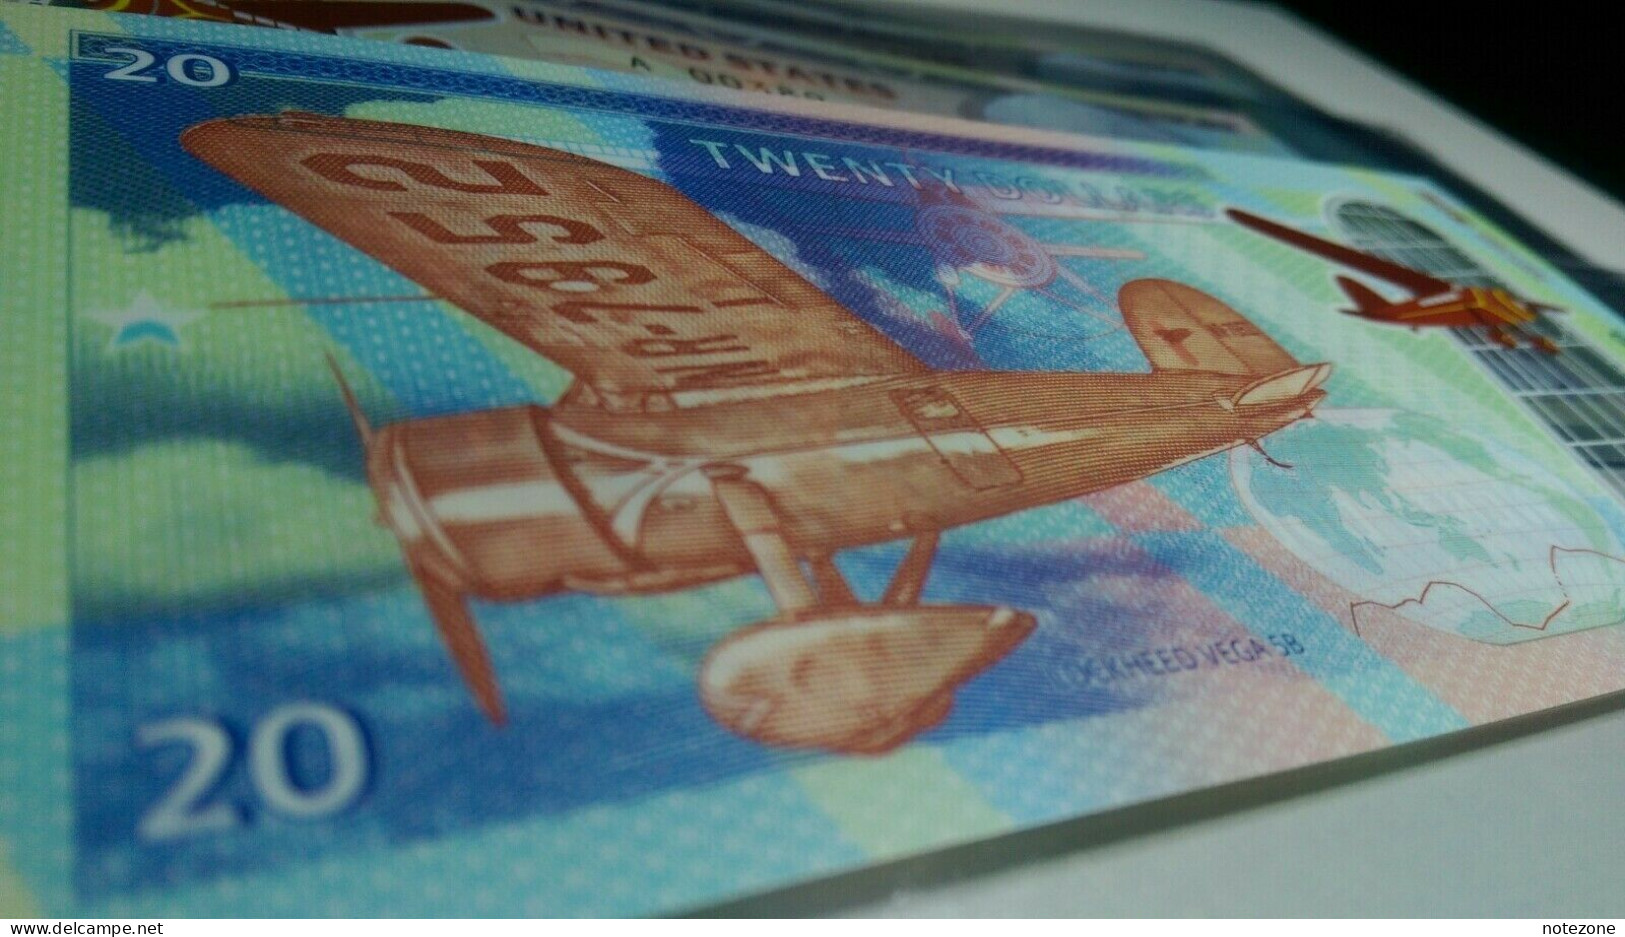 Matej Gabris $20 Amelia Earhart USA banknote Private fantasy test